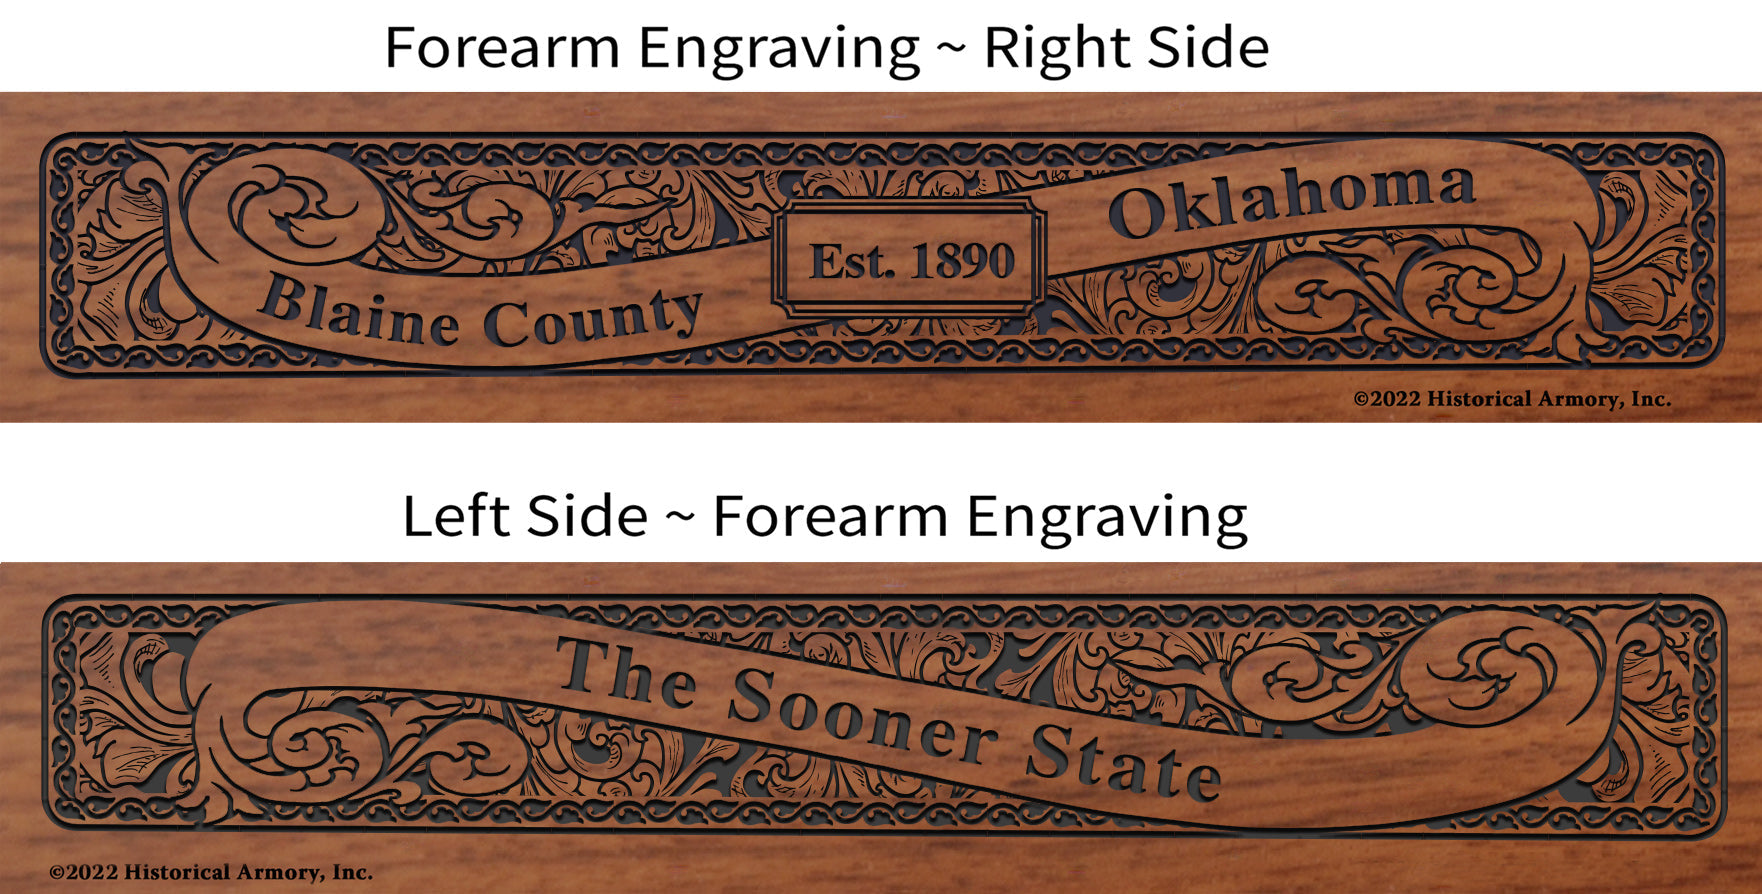 Blaine County Oklahoma Engraved Rifle Forearm